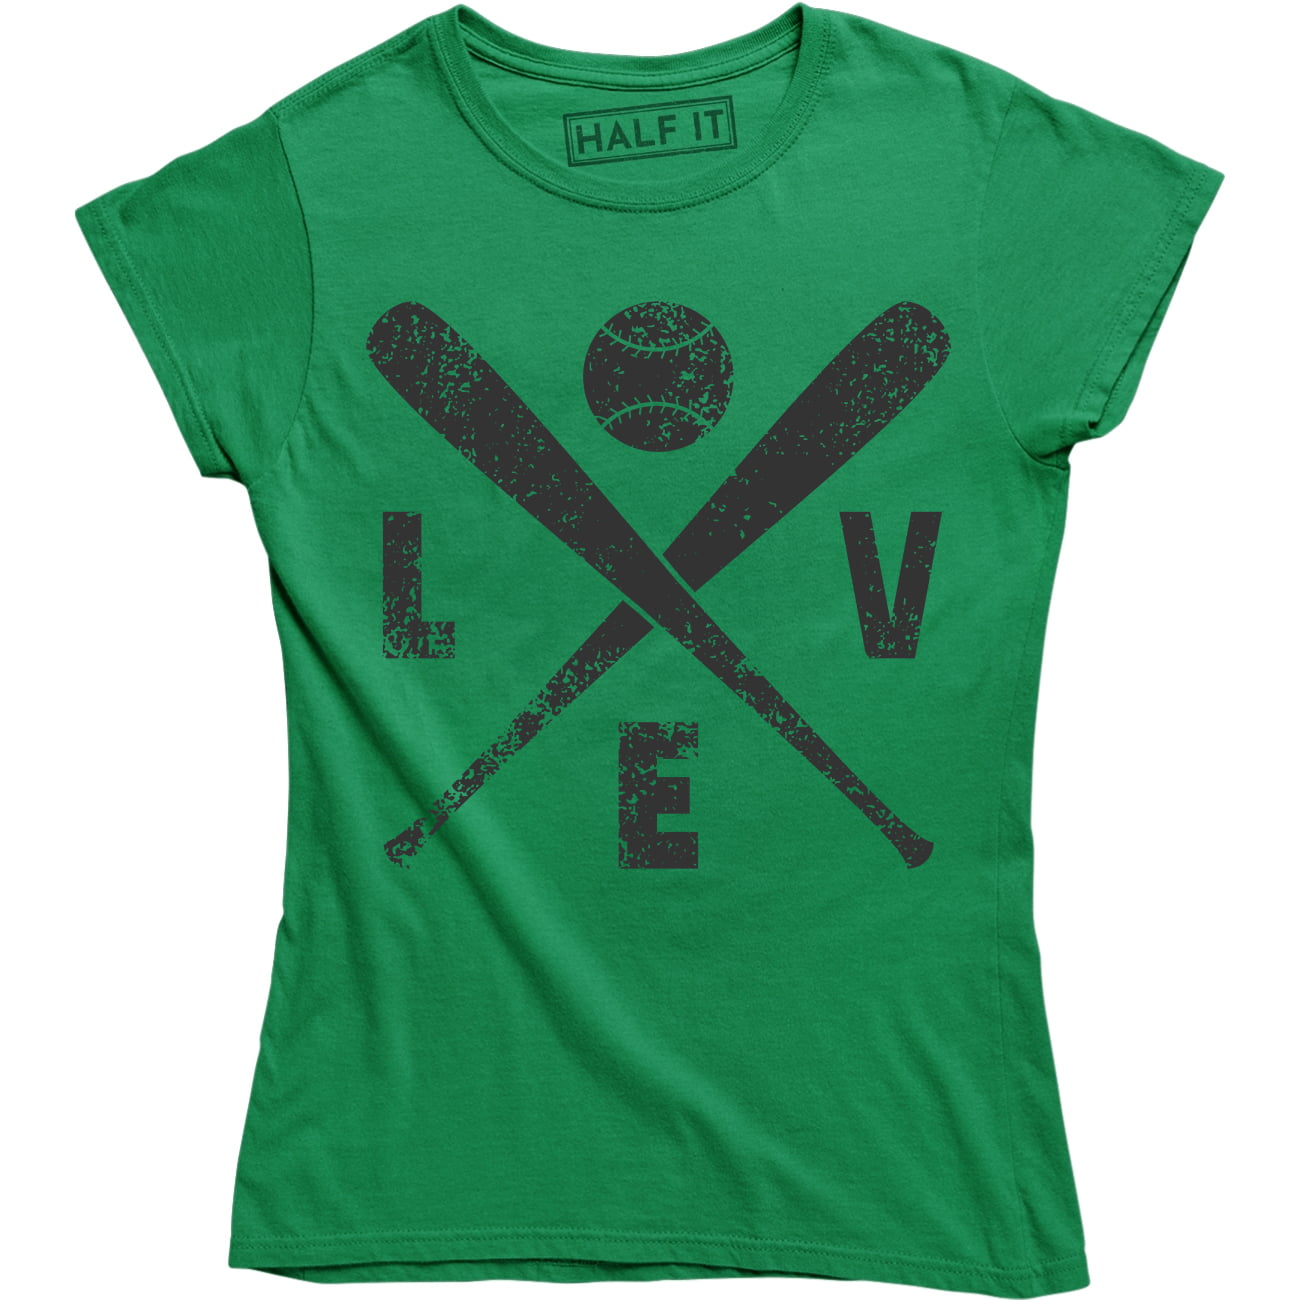 Rub Some Dirt On It Baseball Graphic Cute T Shirt Womens Letter Printed Softball Tees Casual Sports Tops